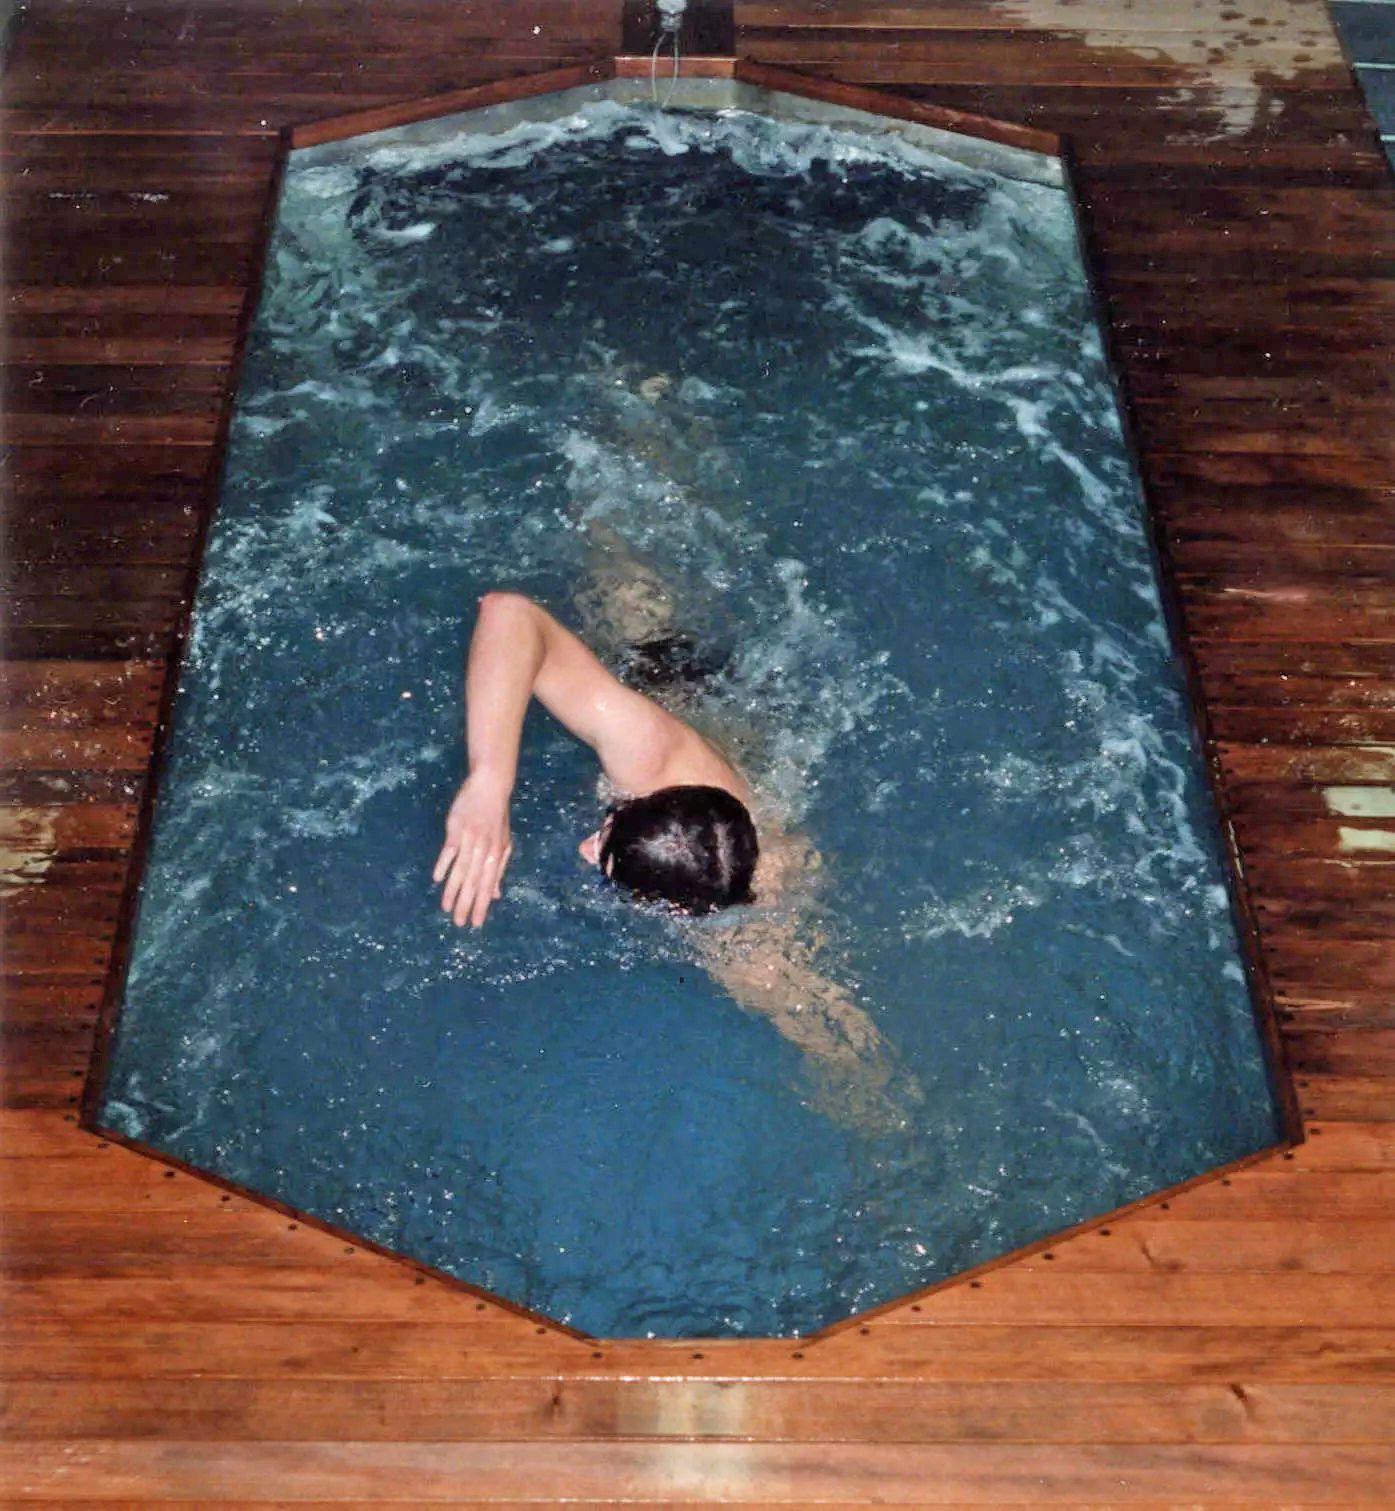 picture an Original Endless Pools installation at Columbia University circa 1988